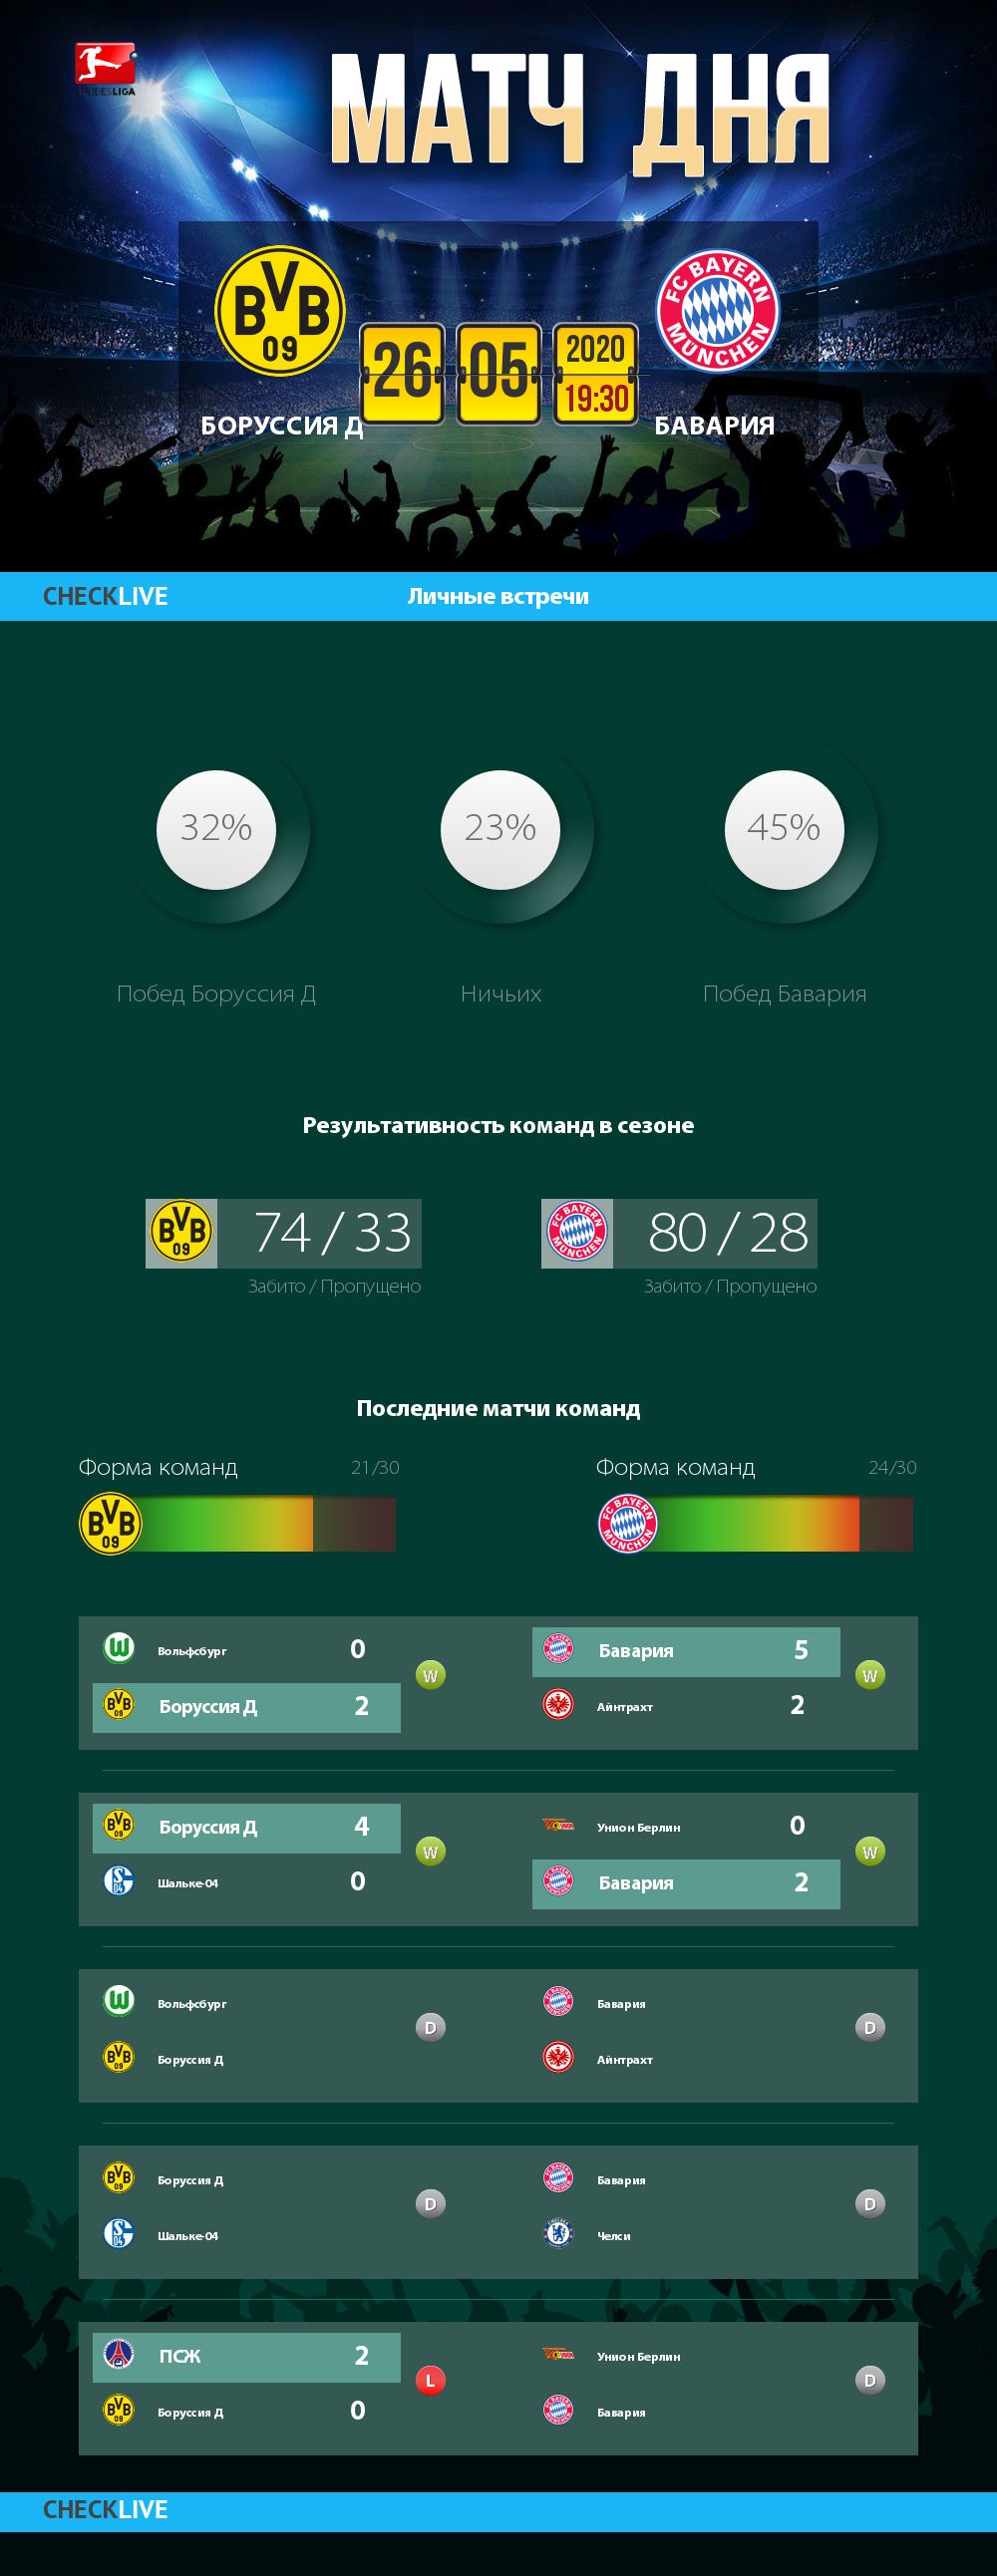 Инфографика Боруссия Д и Бавария матч дня 26.05.2020